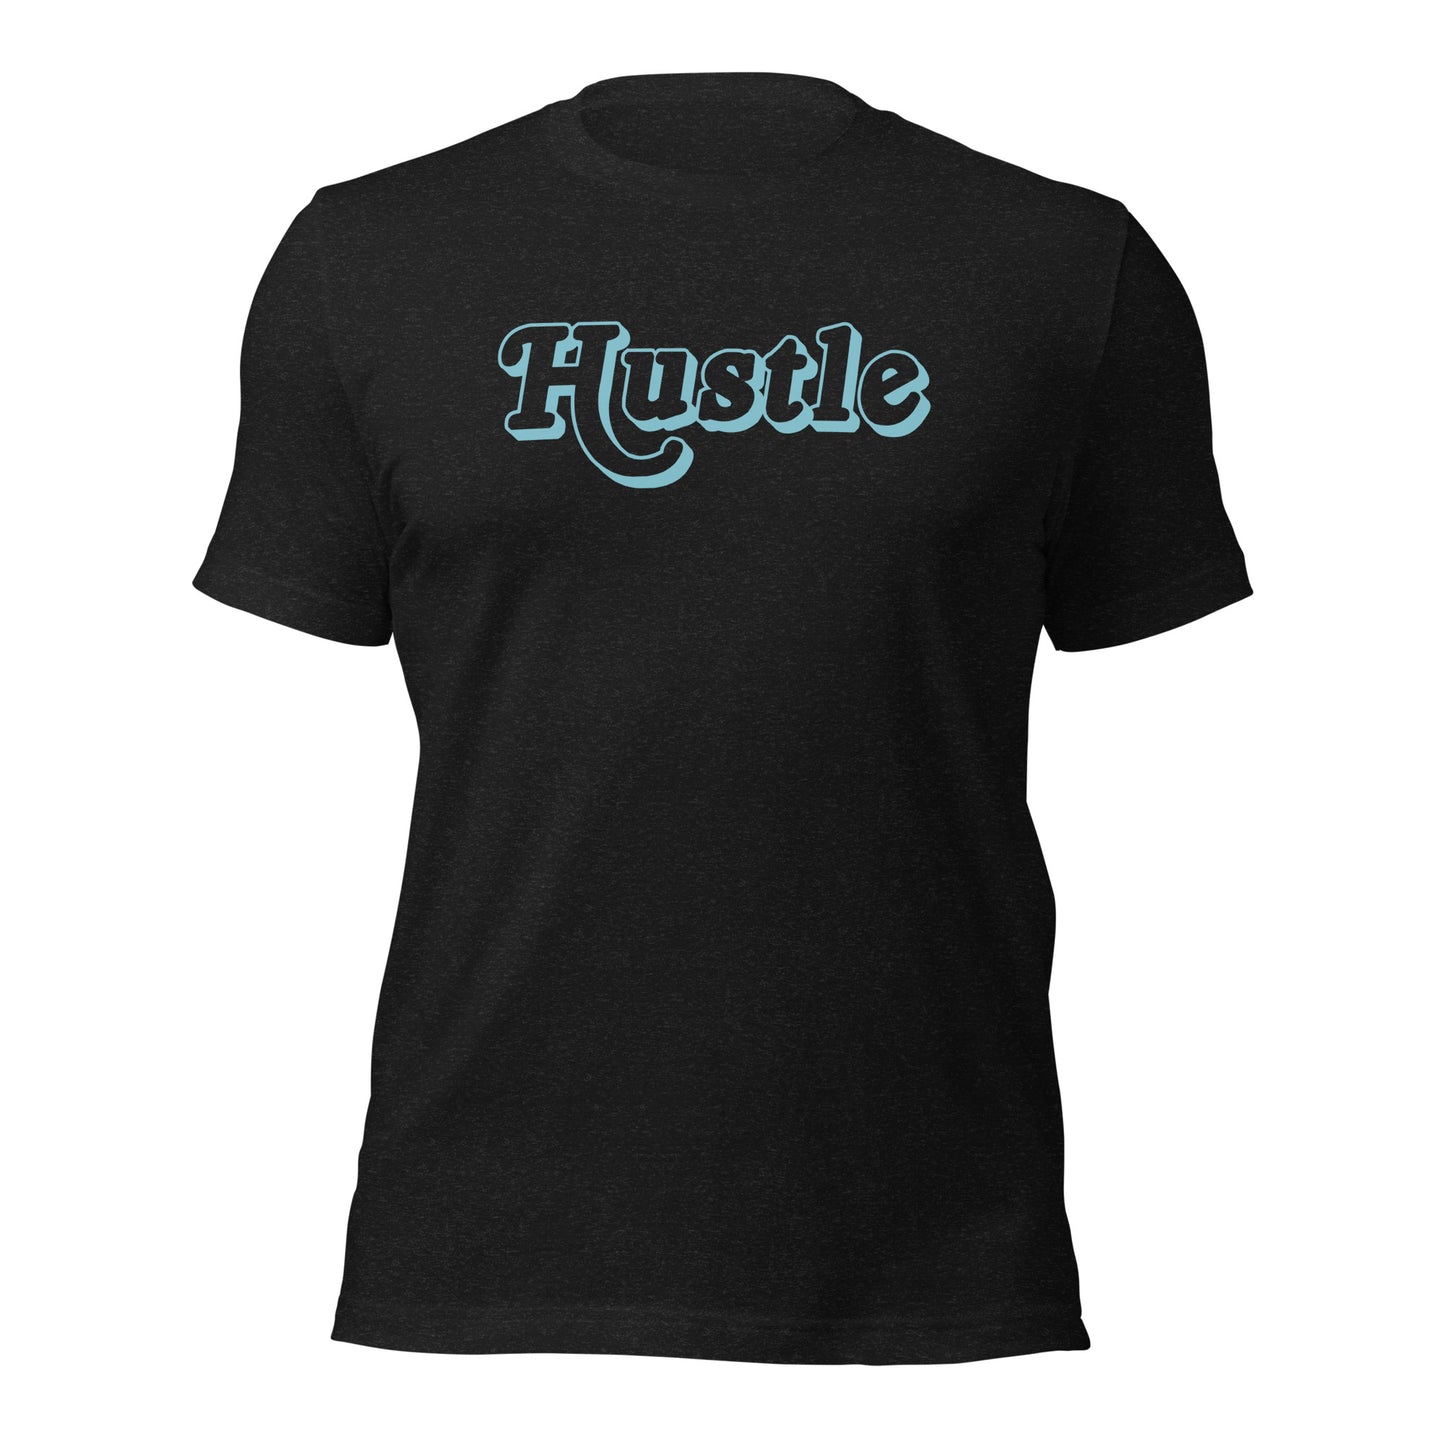 "Hustle" Entrepreneur T-Shirt - Weave Got Gifts - Unique Gifts You Won’t Find Anywhere Else!